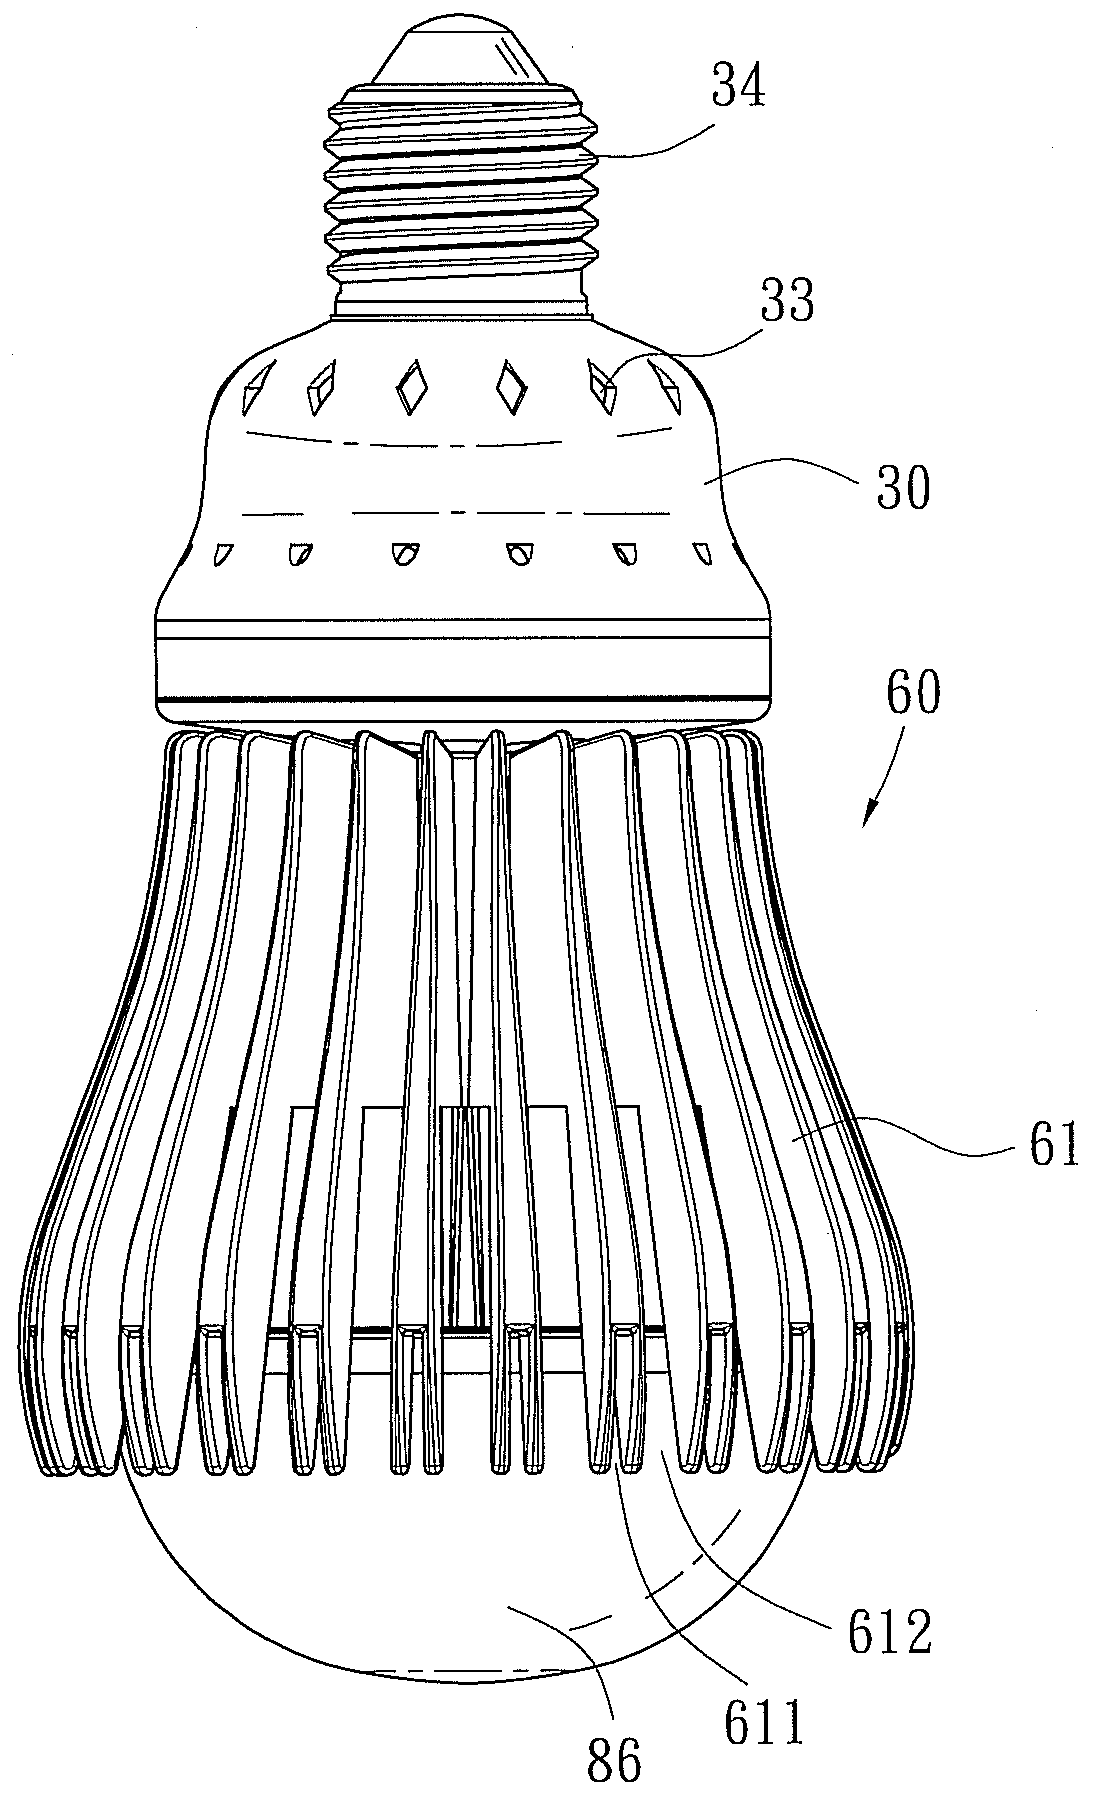 LED lamp bulb structure